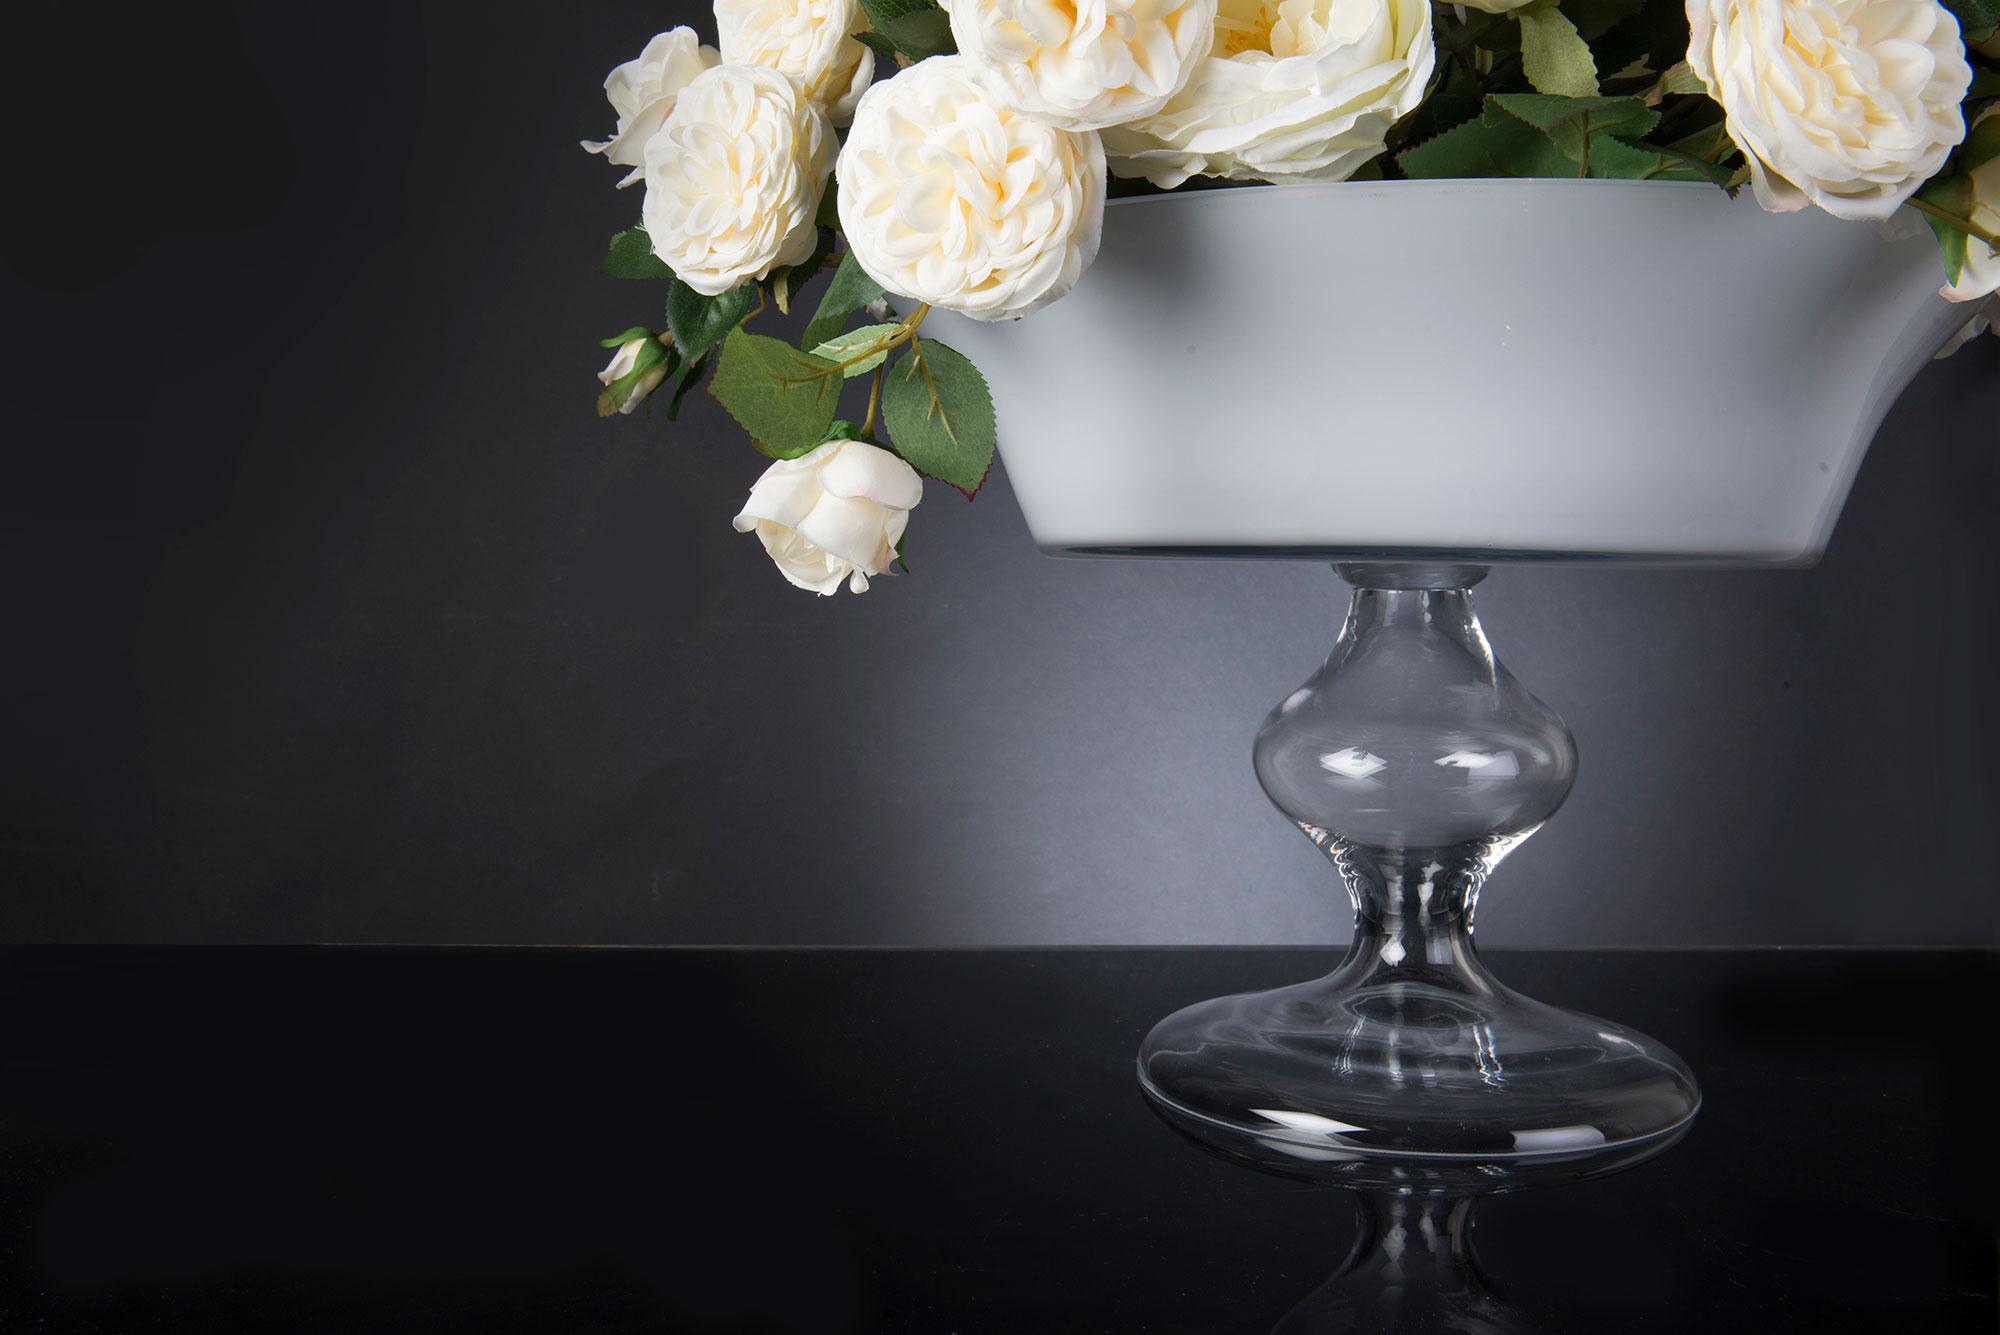 Italian Eternity Camilla Roses Set Arrangement, Flowers, Italy For Sale